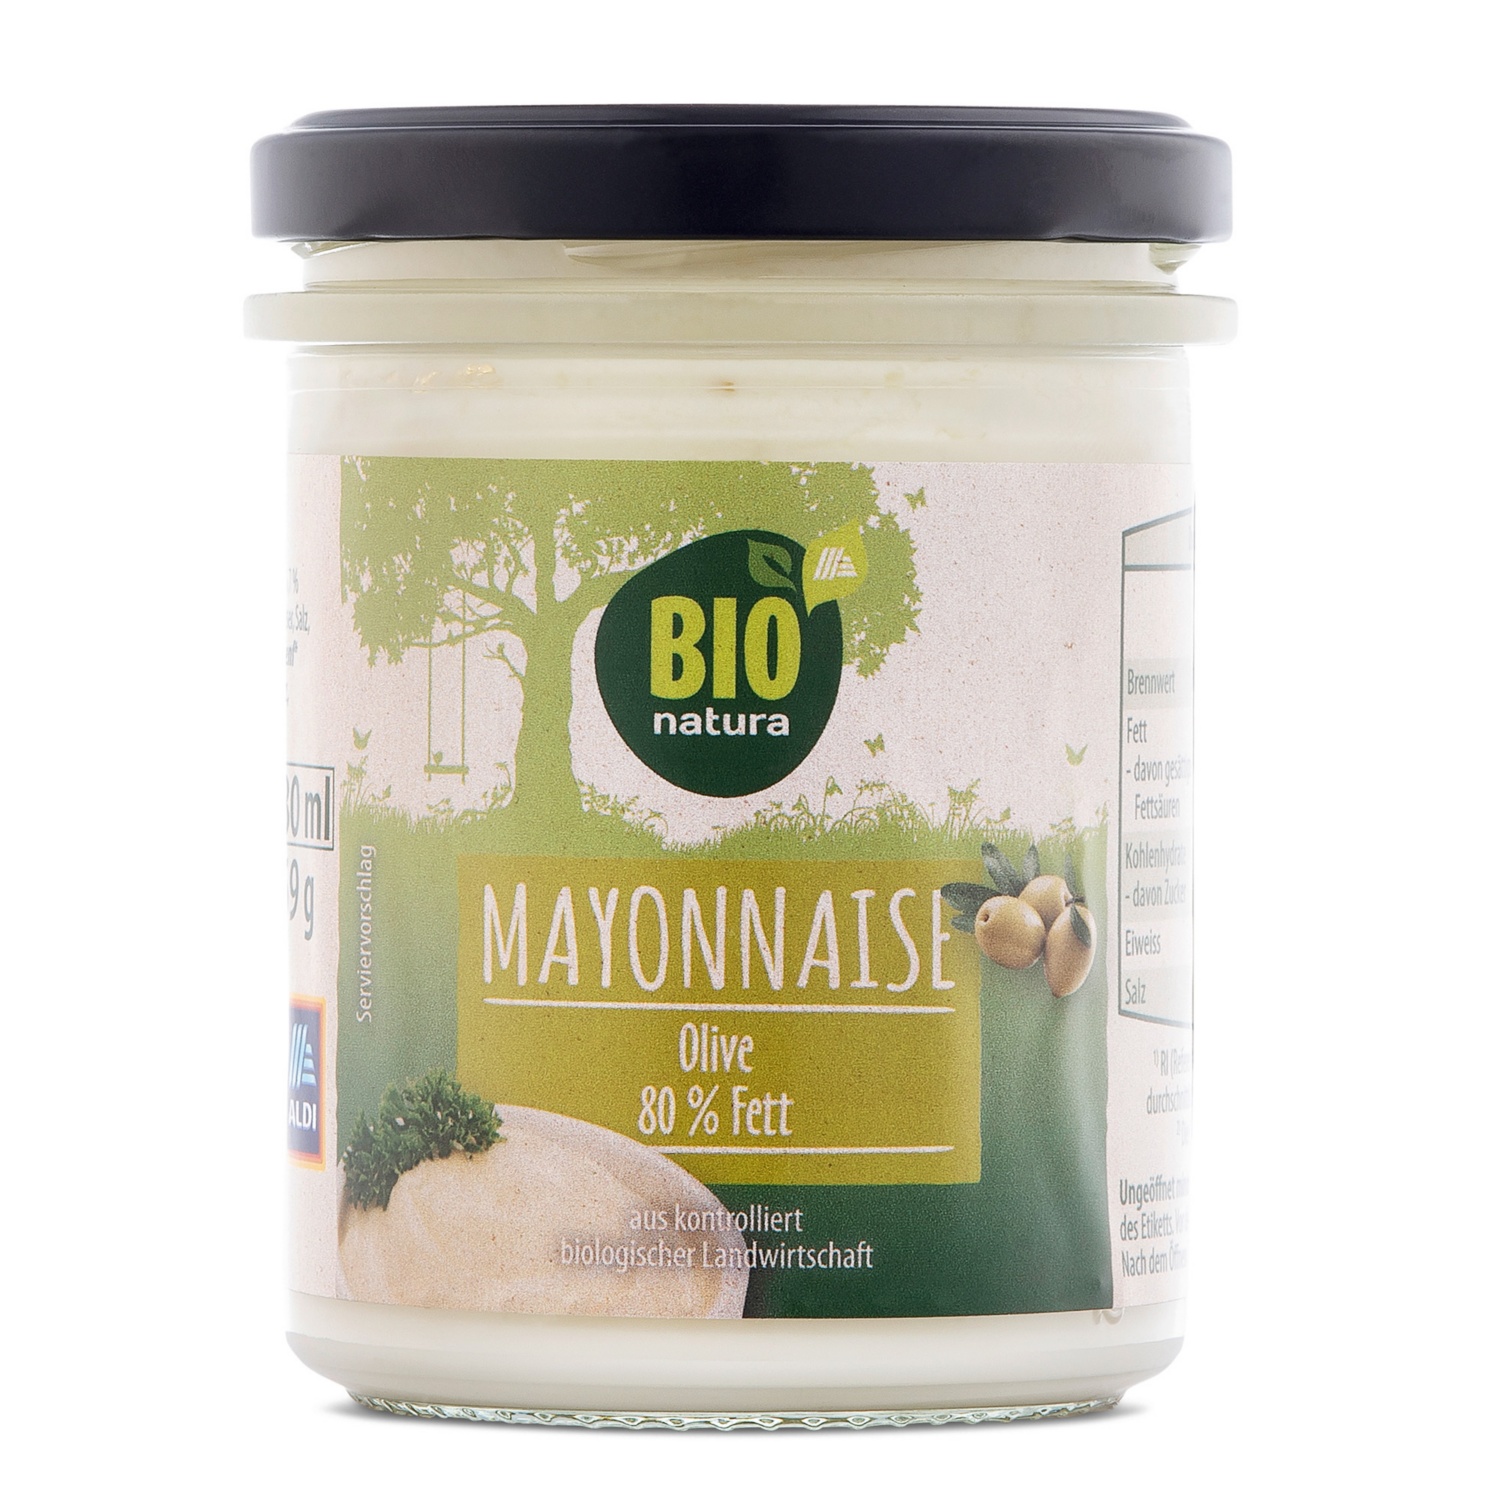 BIO NATURA BIO-Mayonnaise 80%, Olive